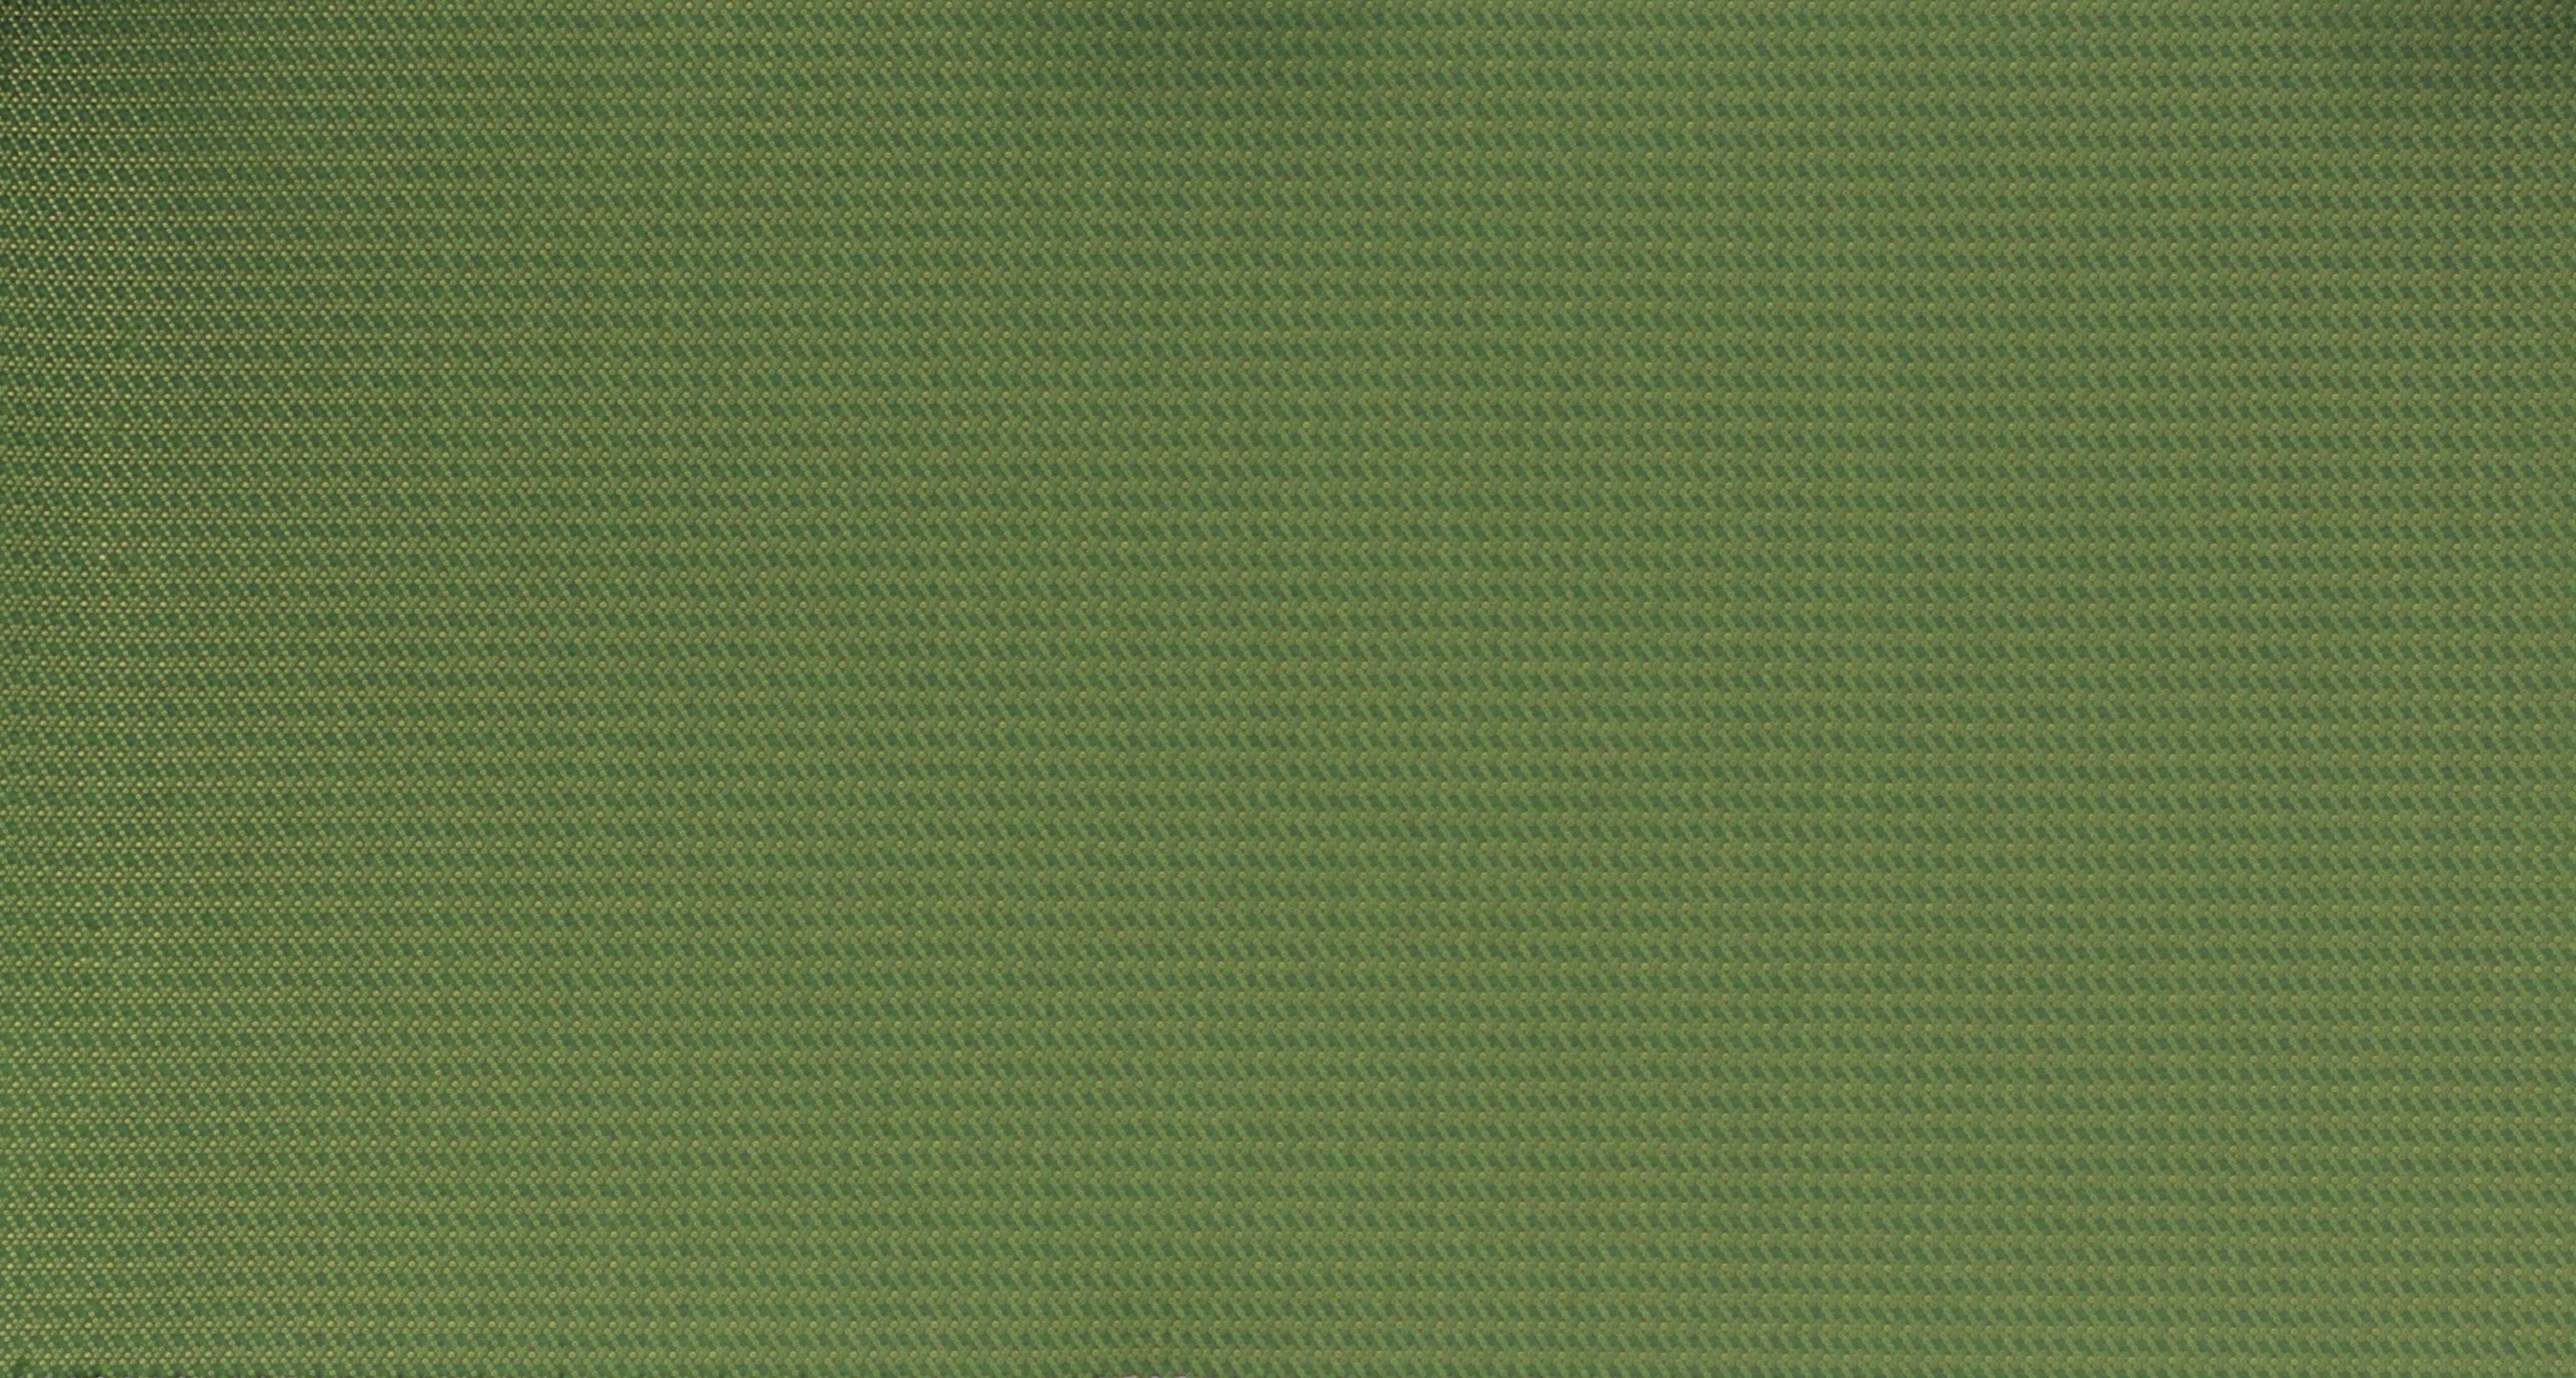 Хаки свет. Ткань хаки армейский (RAL-7008). Цвет хаки зеленый болотный. Защитный цвет. Зеленая ткань.